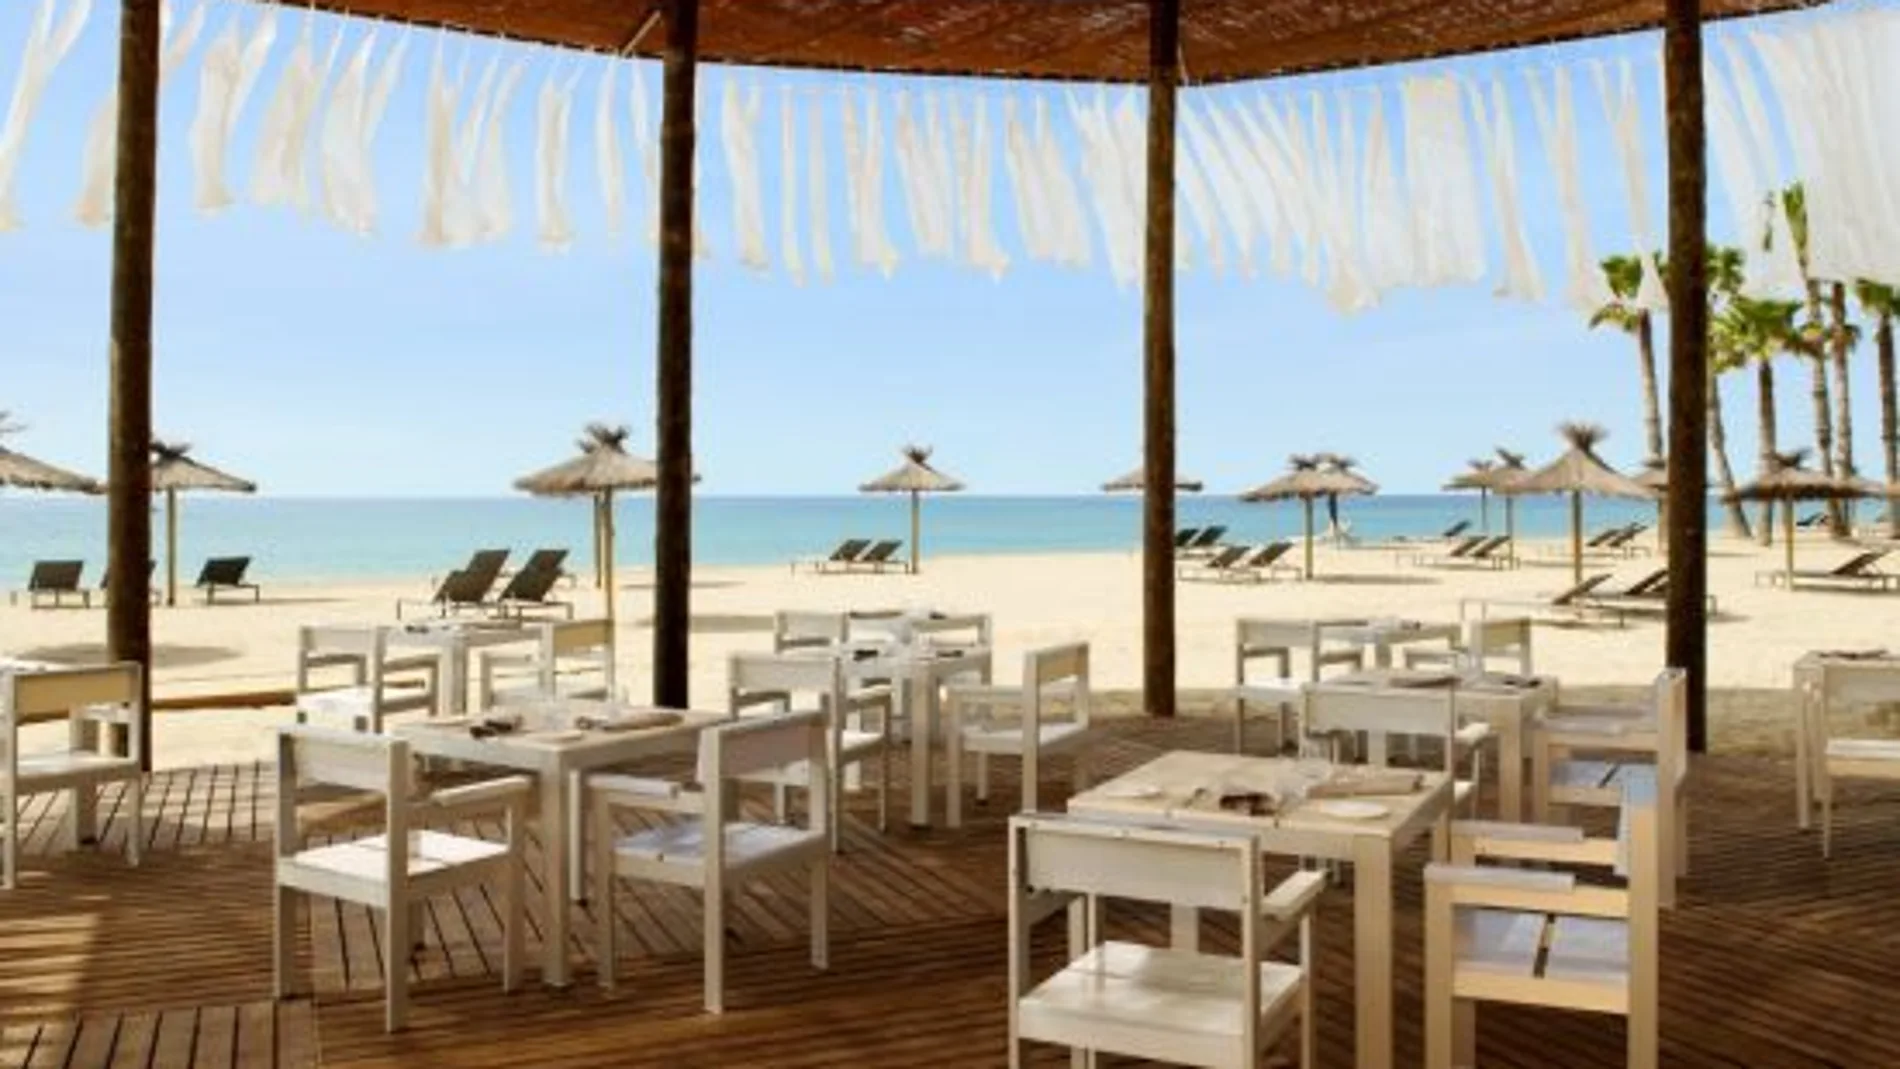 Ona Beach Club, del hotel Le Meridien Ra, en El Vendrell (Tarragona)